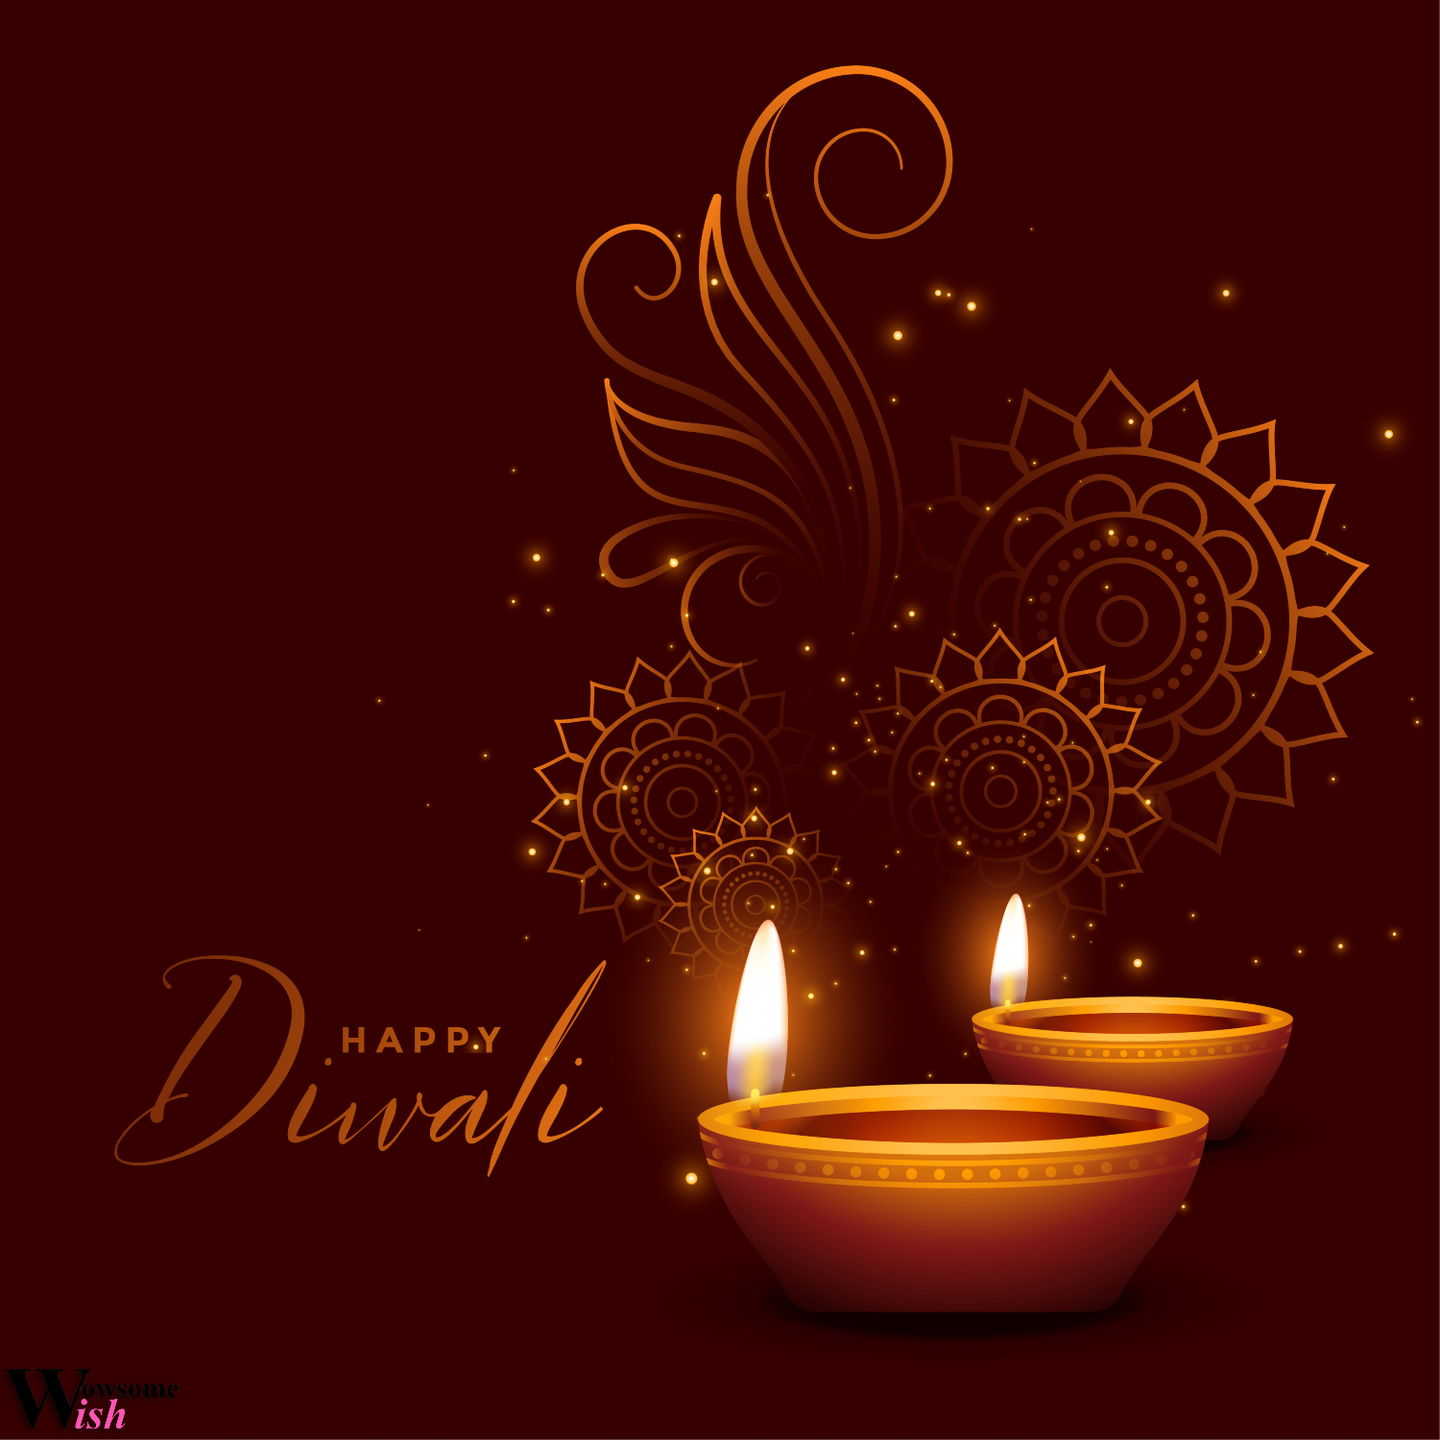 Wowsome Wish Card For Diwali Gift - 4